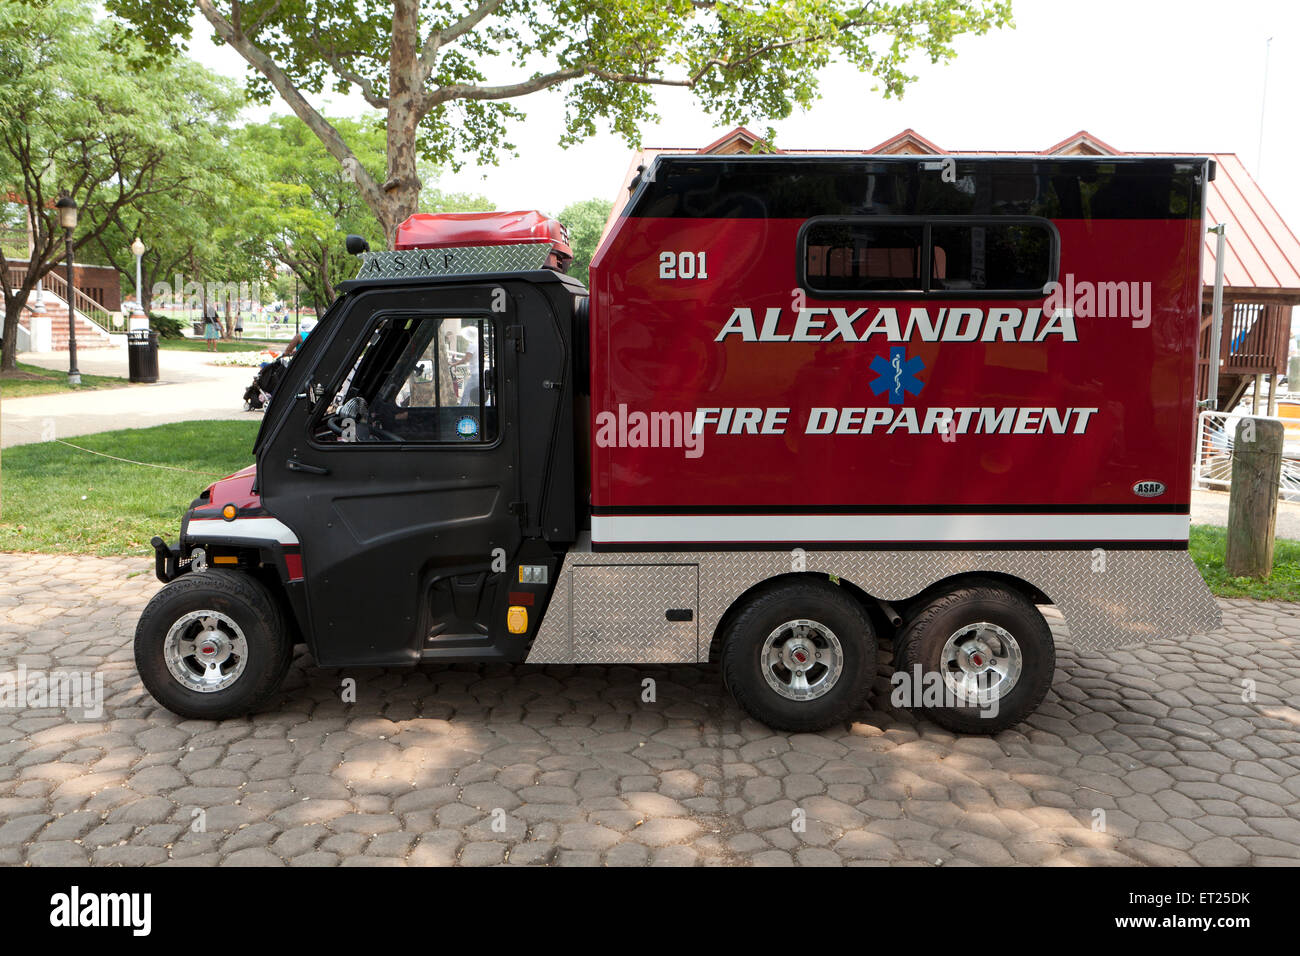 Fire Department ATV (All-Terrain Vehicle) truck - Alexandria, Virginia USA Stock Photo